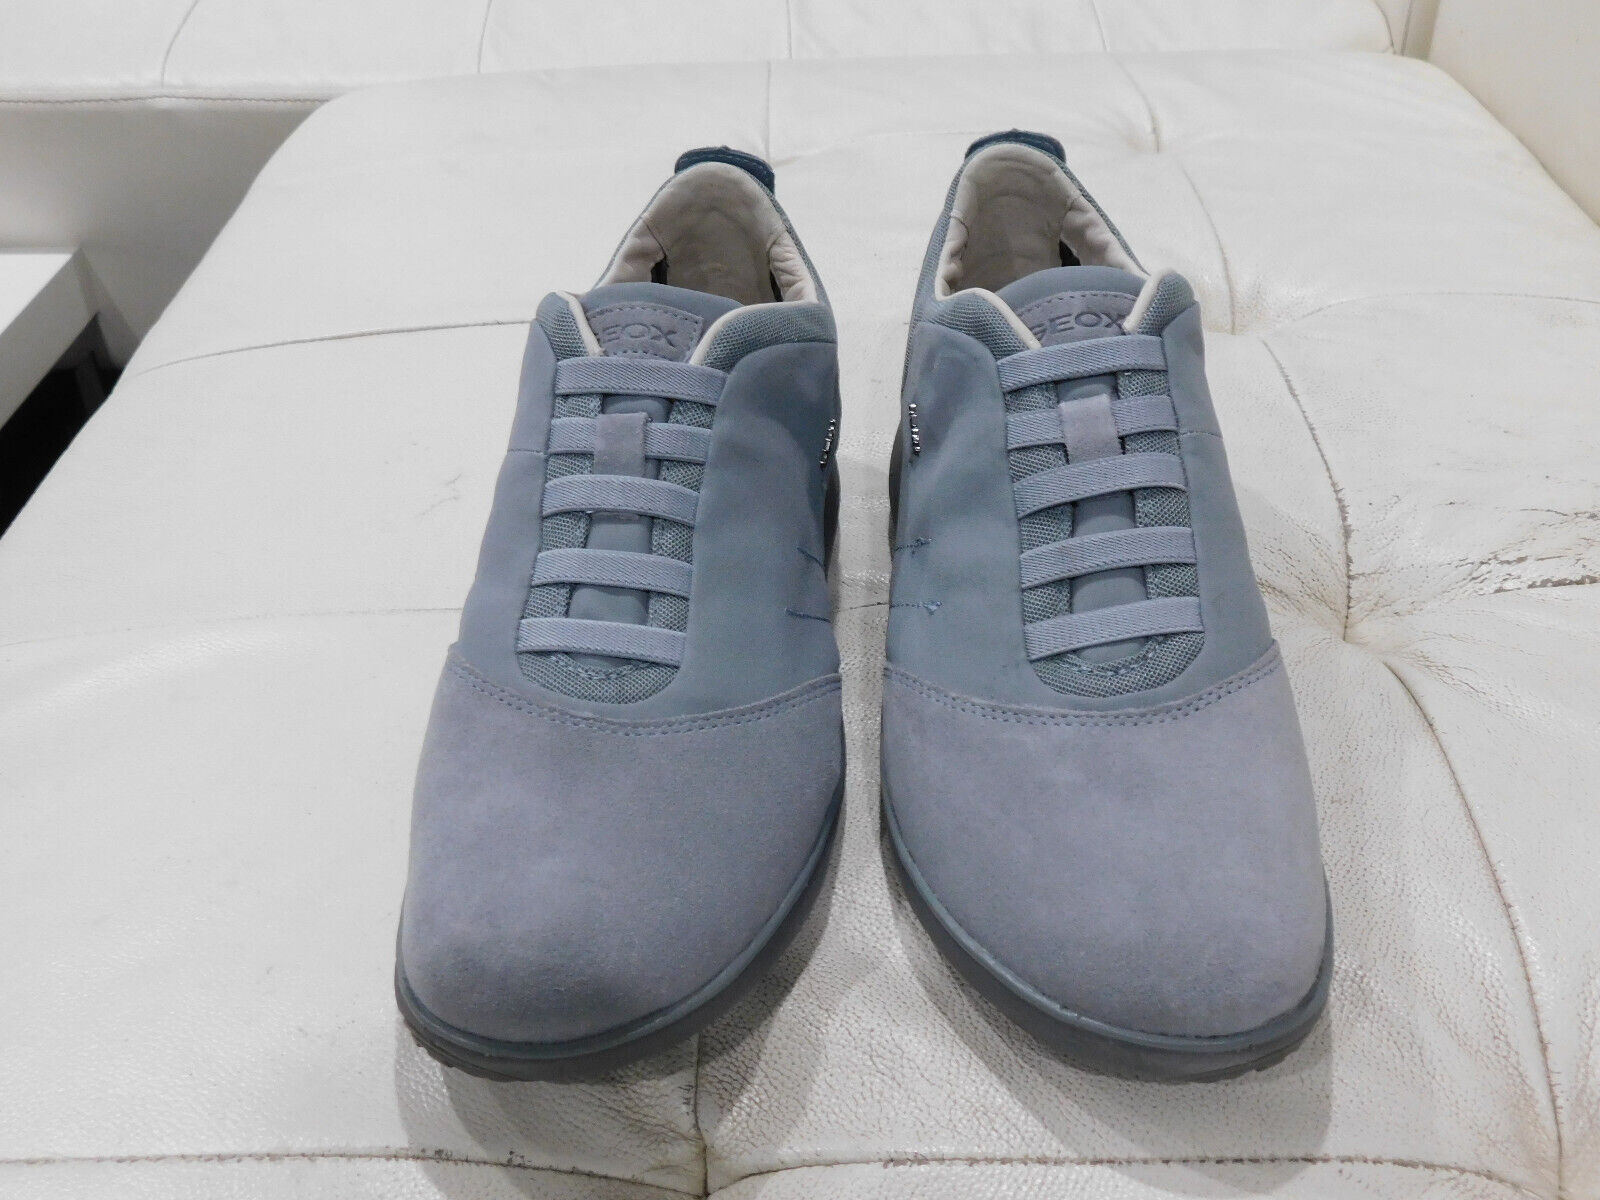 Men GEOX Respira Nebula shoes size 45( US11.5). Super confort walking